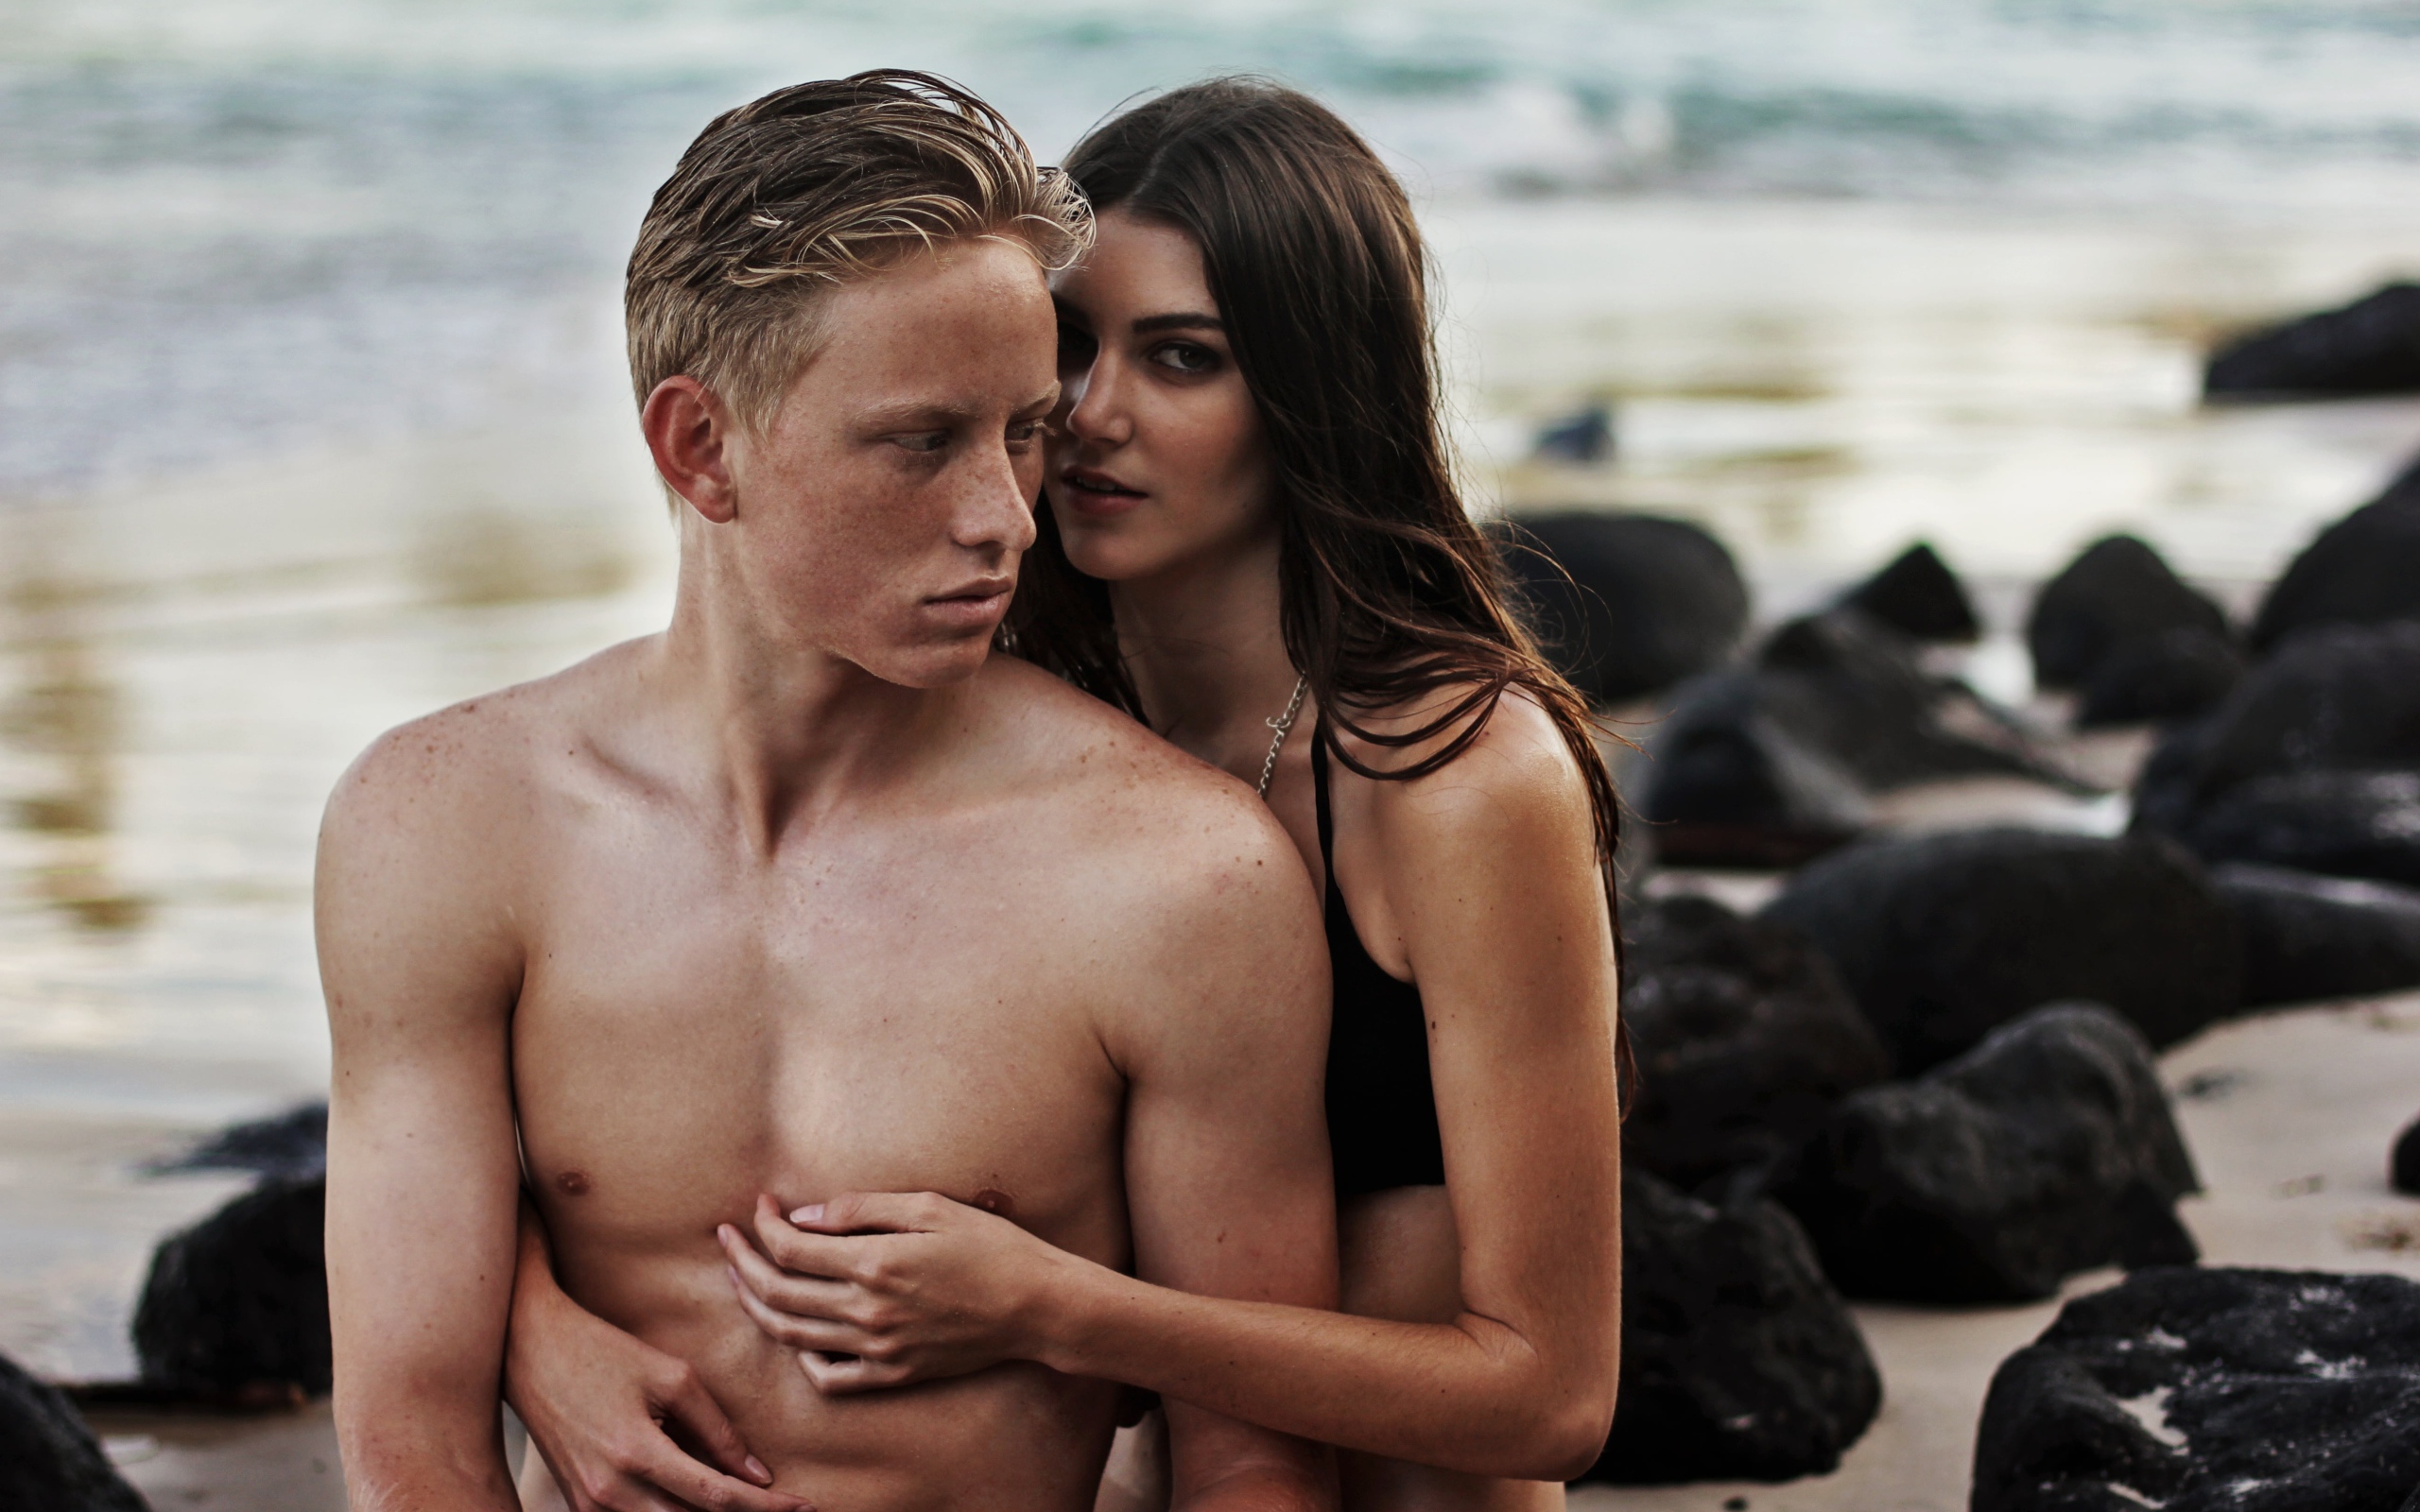 Влюбленная пара сидит на камнях на берегу моря 